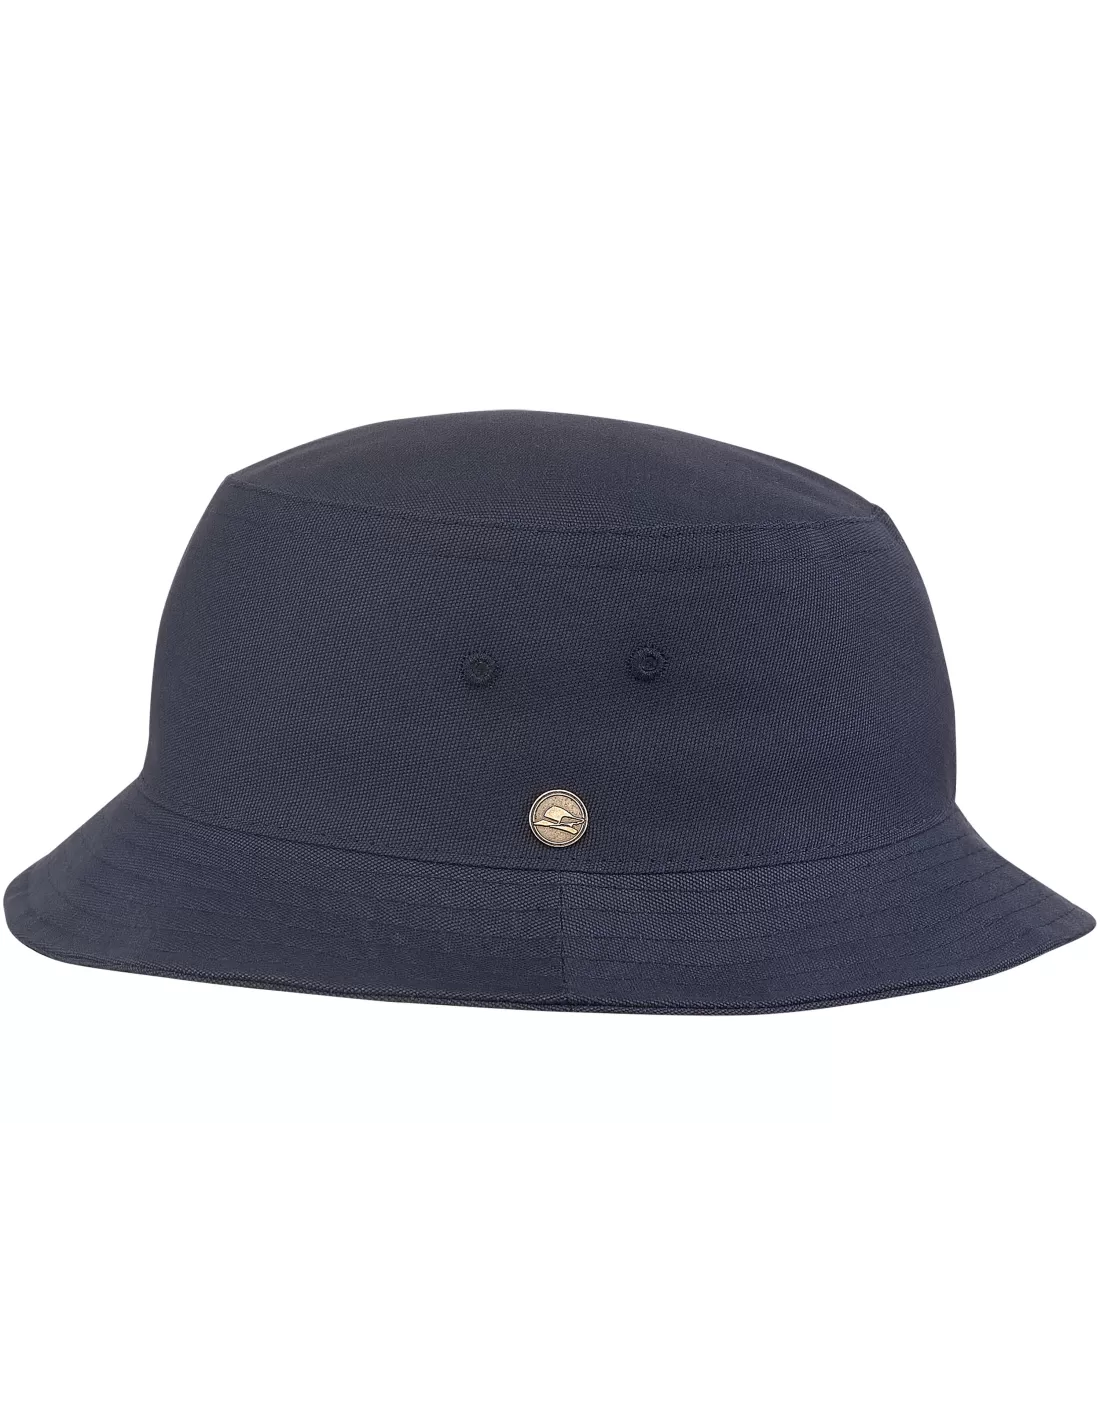 Golf best plain Bucket, fishing sun hat with short brim, pure cotton.